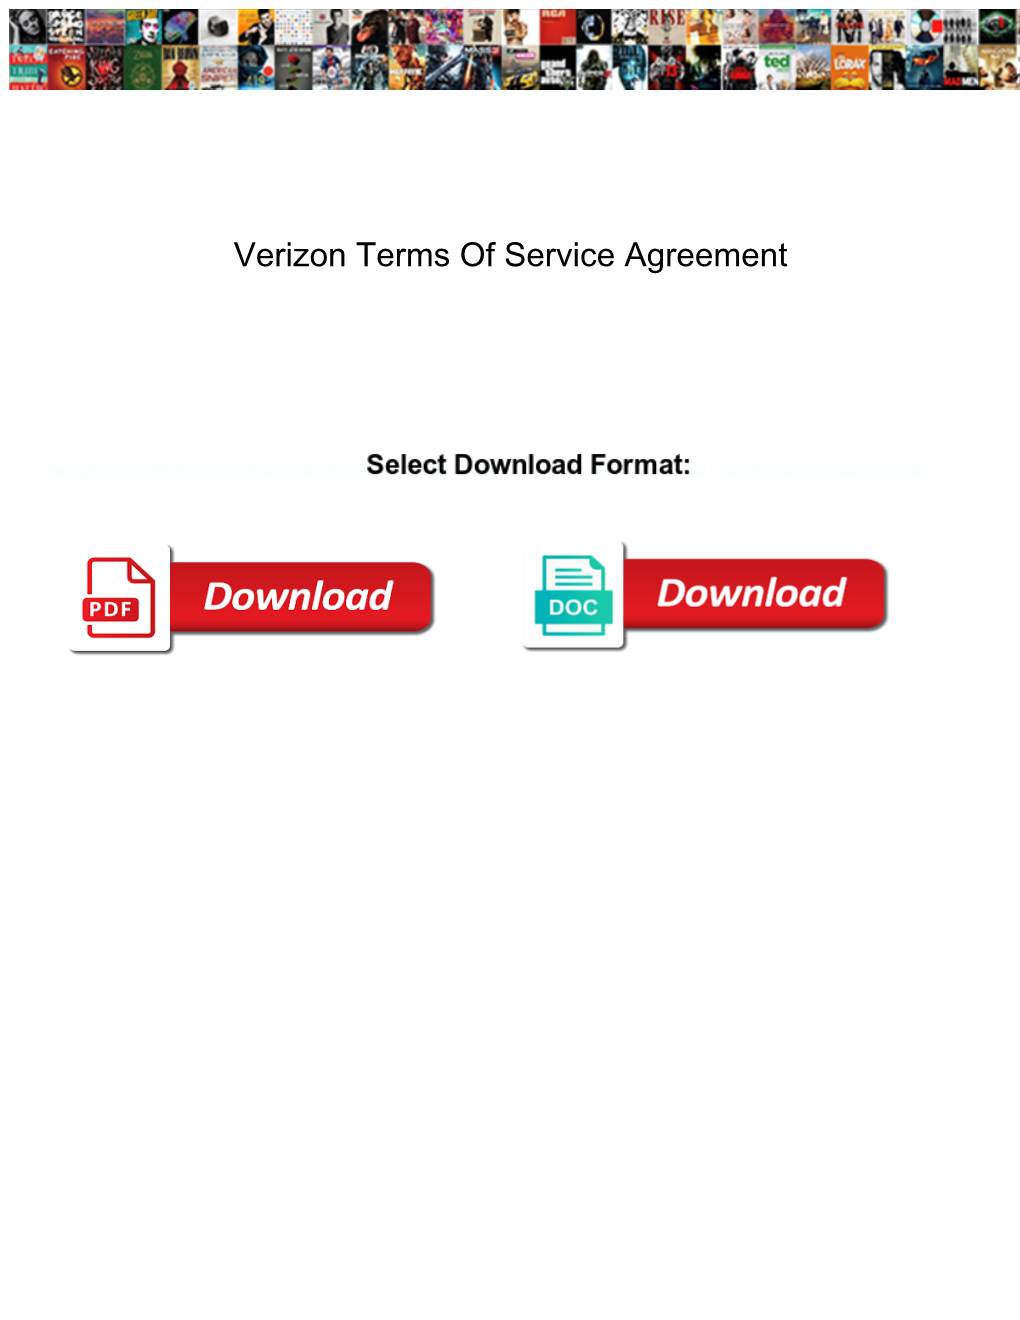 Verizon Terms of Service Agreement